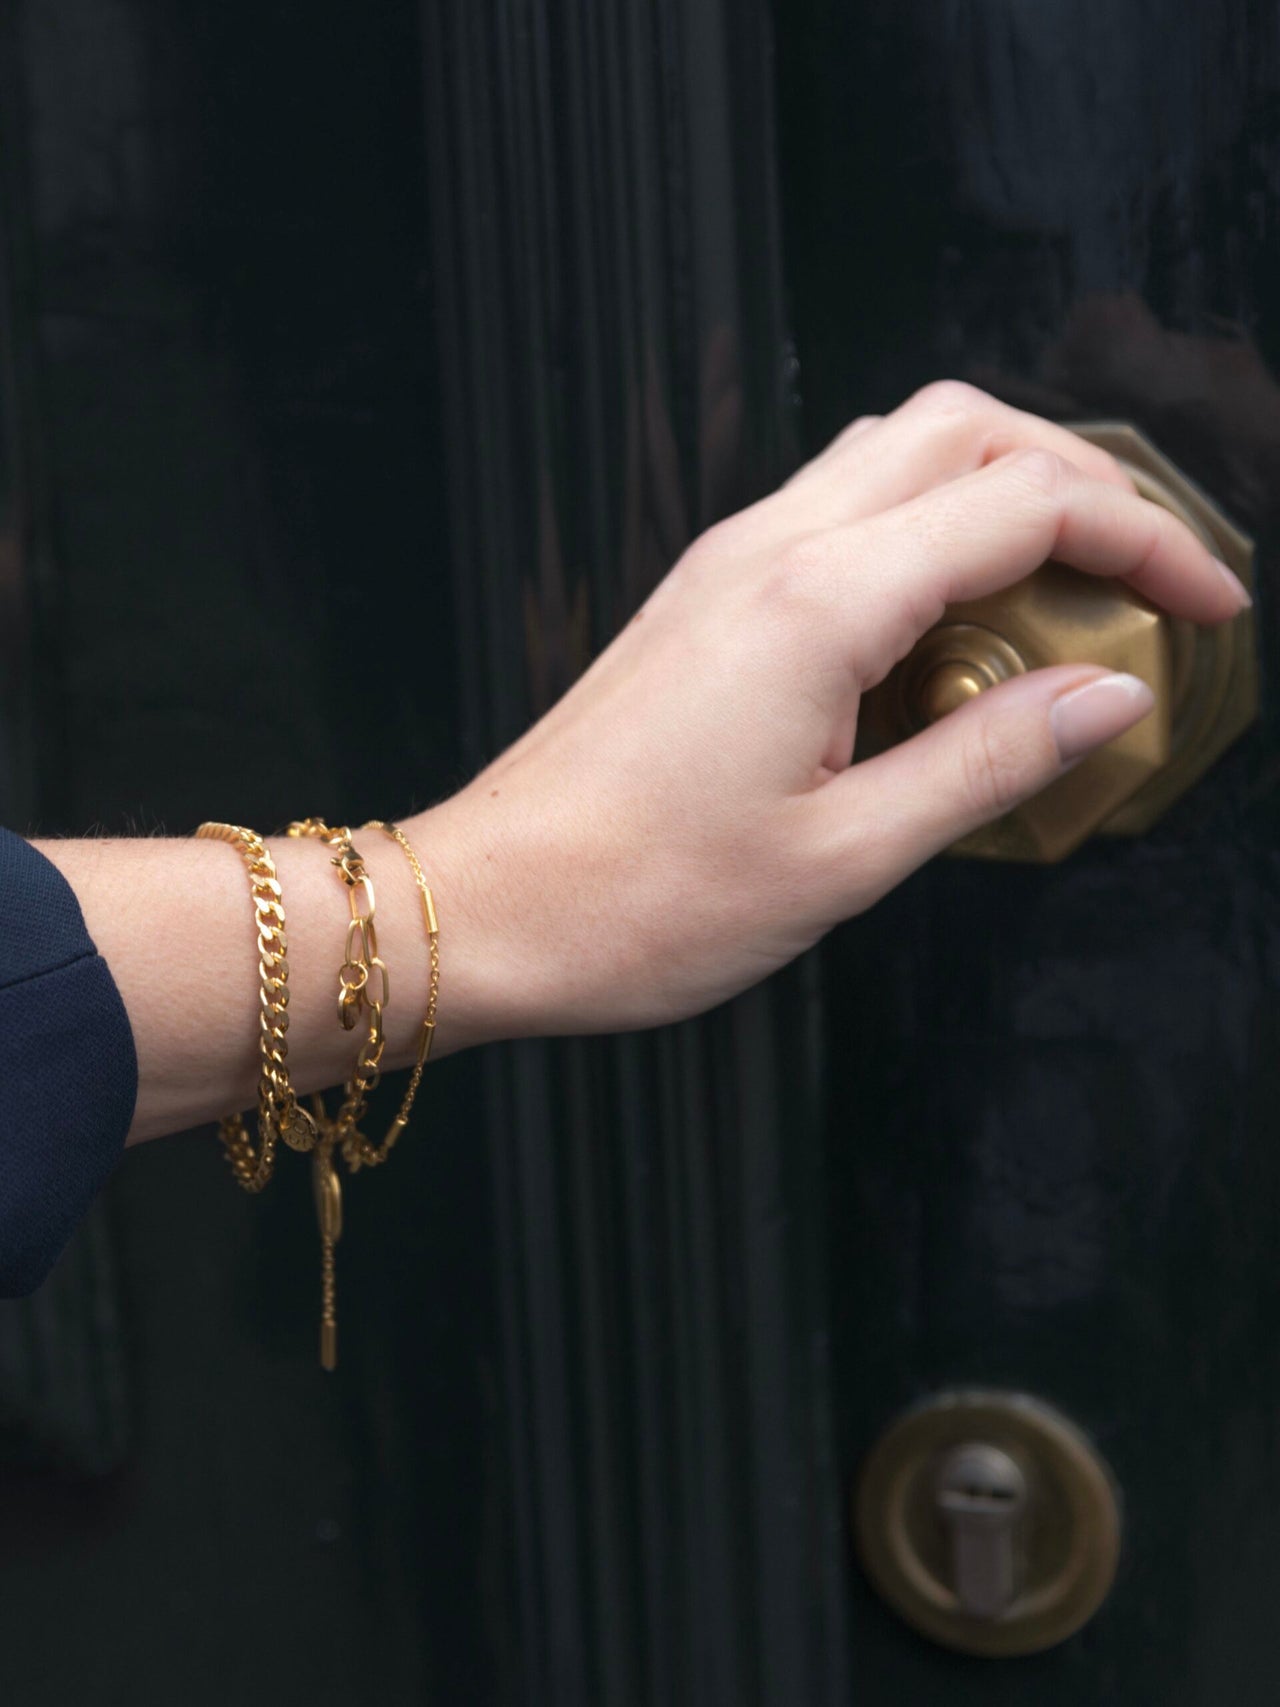 Vergulde Armband met staafjes  goud - LEEF mode en accessoires